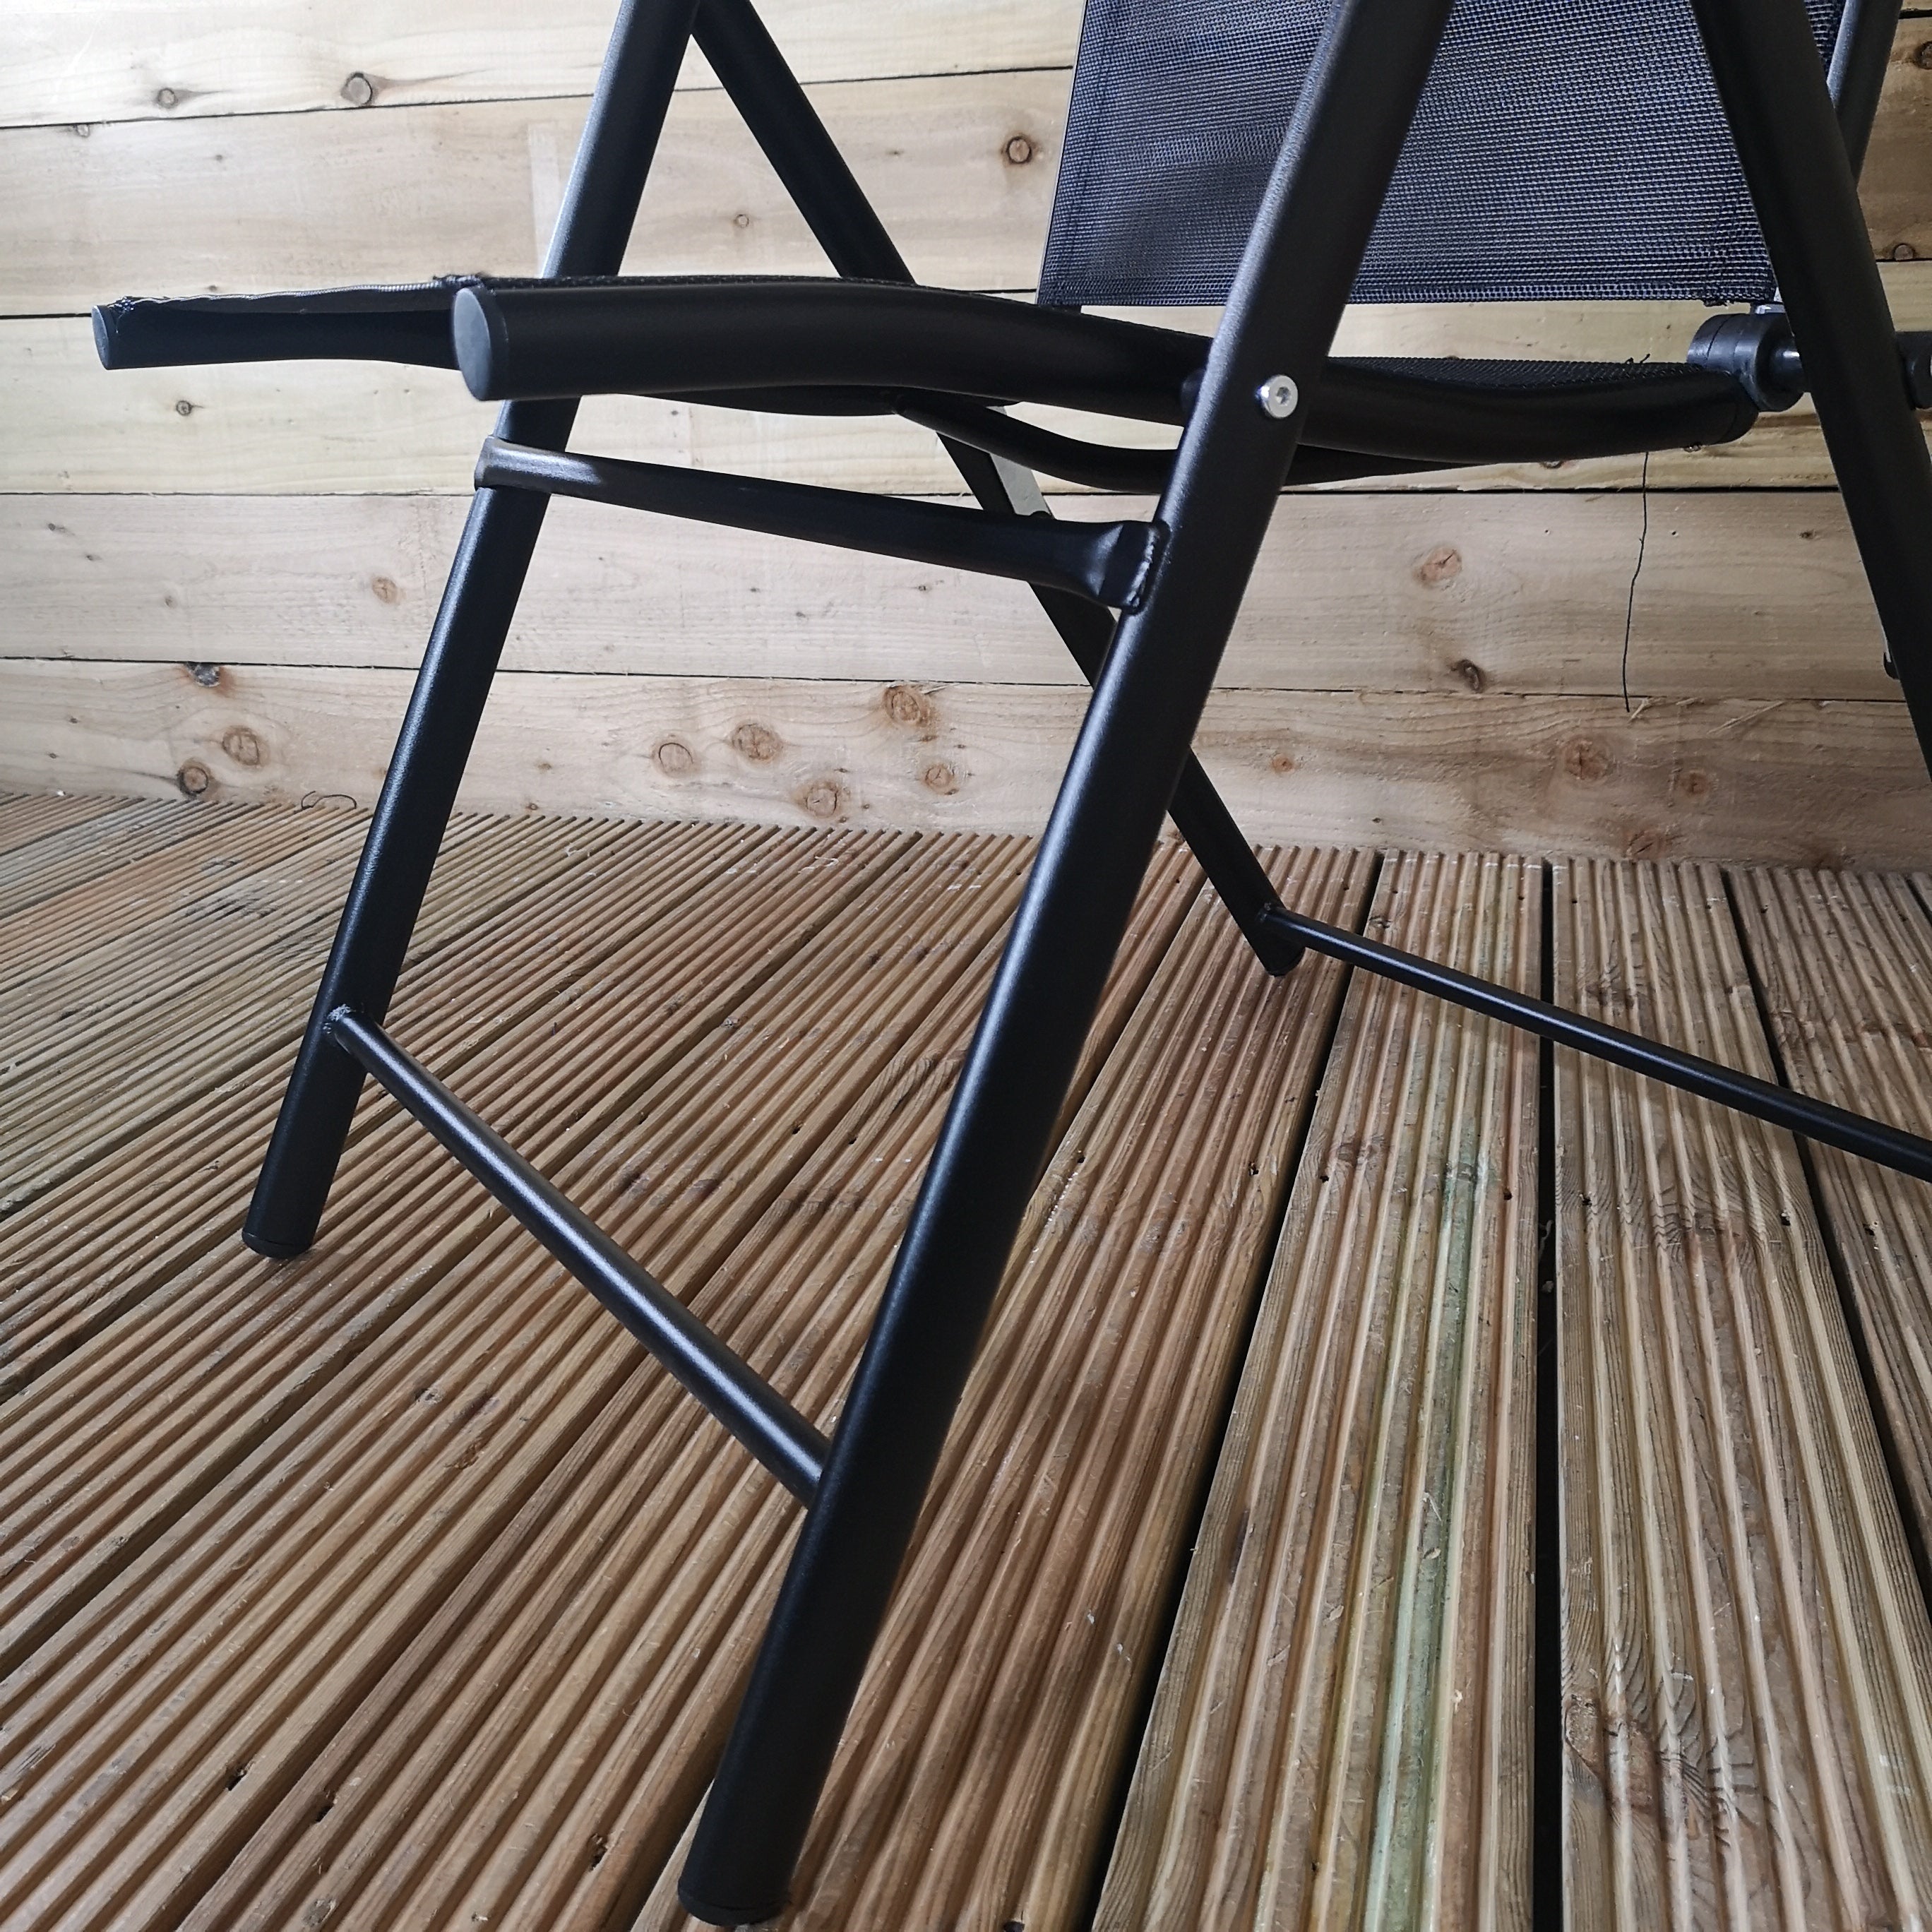 2 x Multi Position High Back Reclining Garden / Outdoor Folding Chair in Black